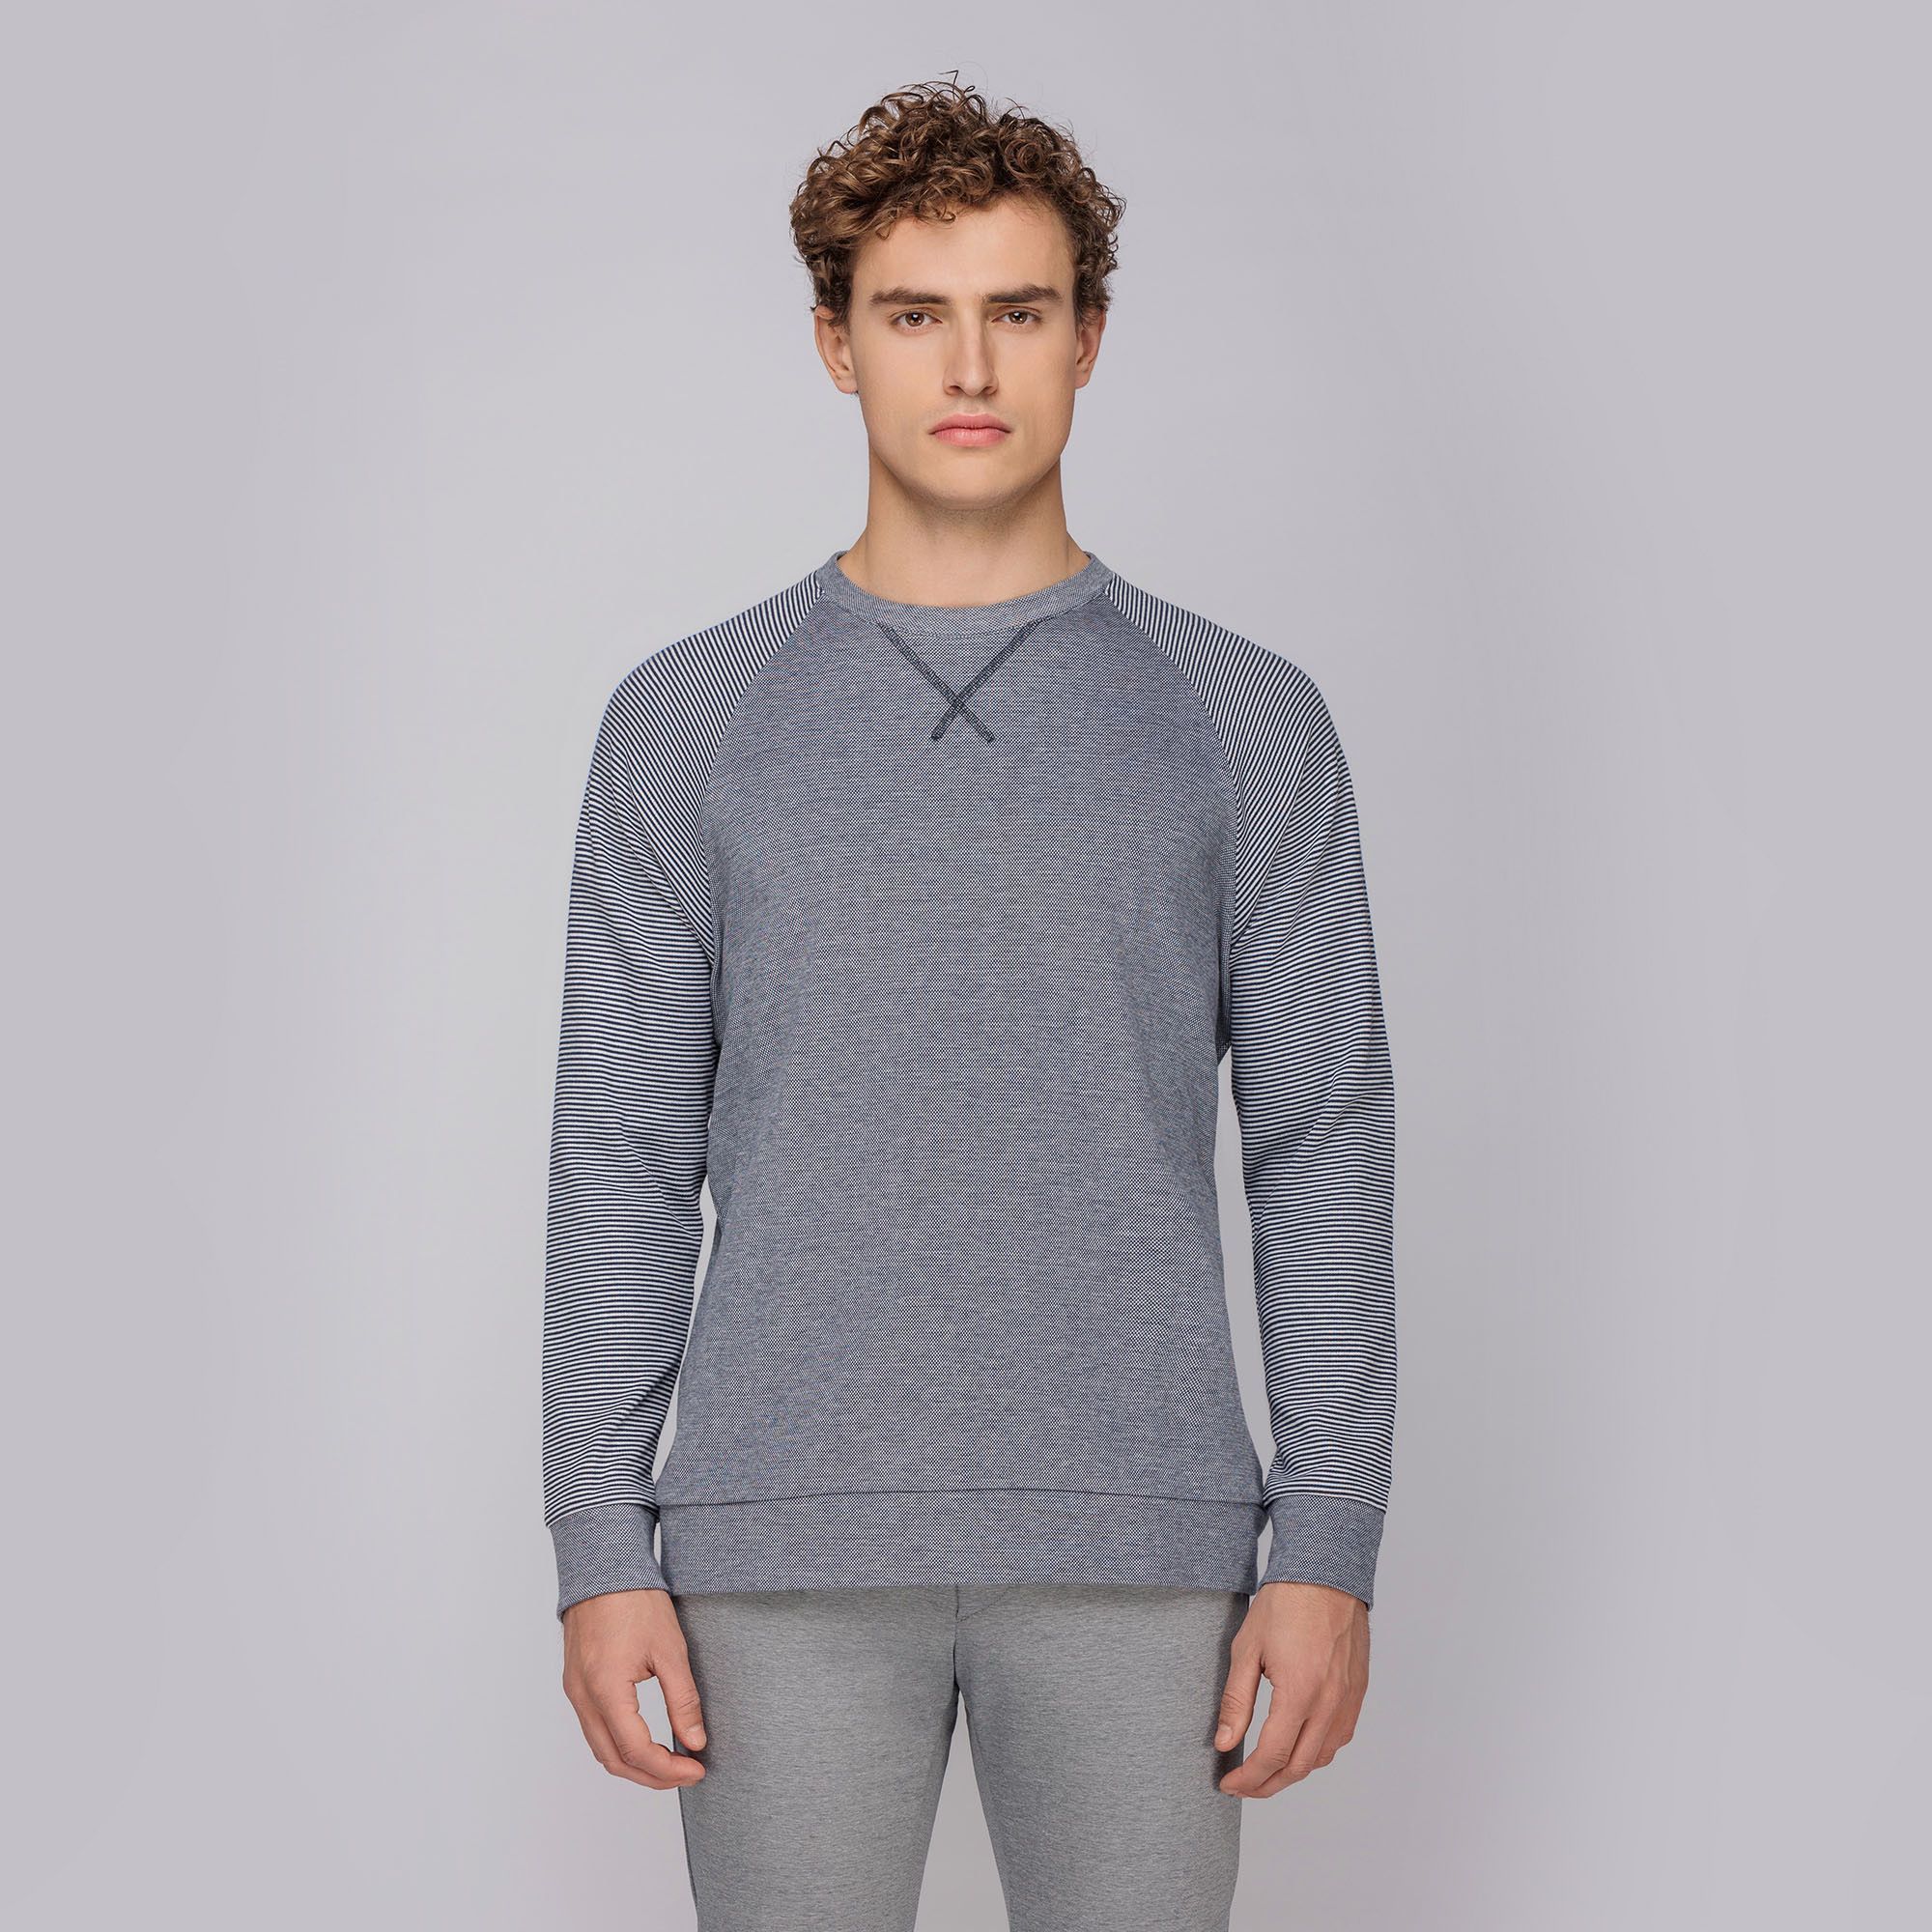 Men's Blue Crewneck Sweater